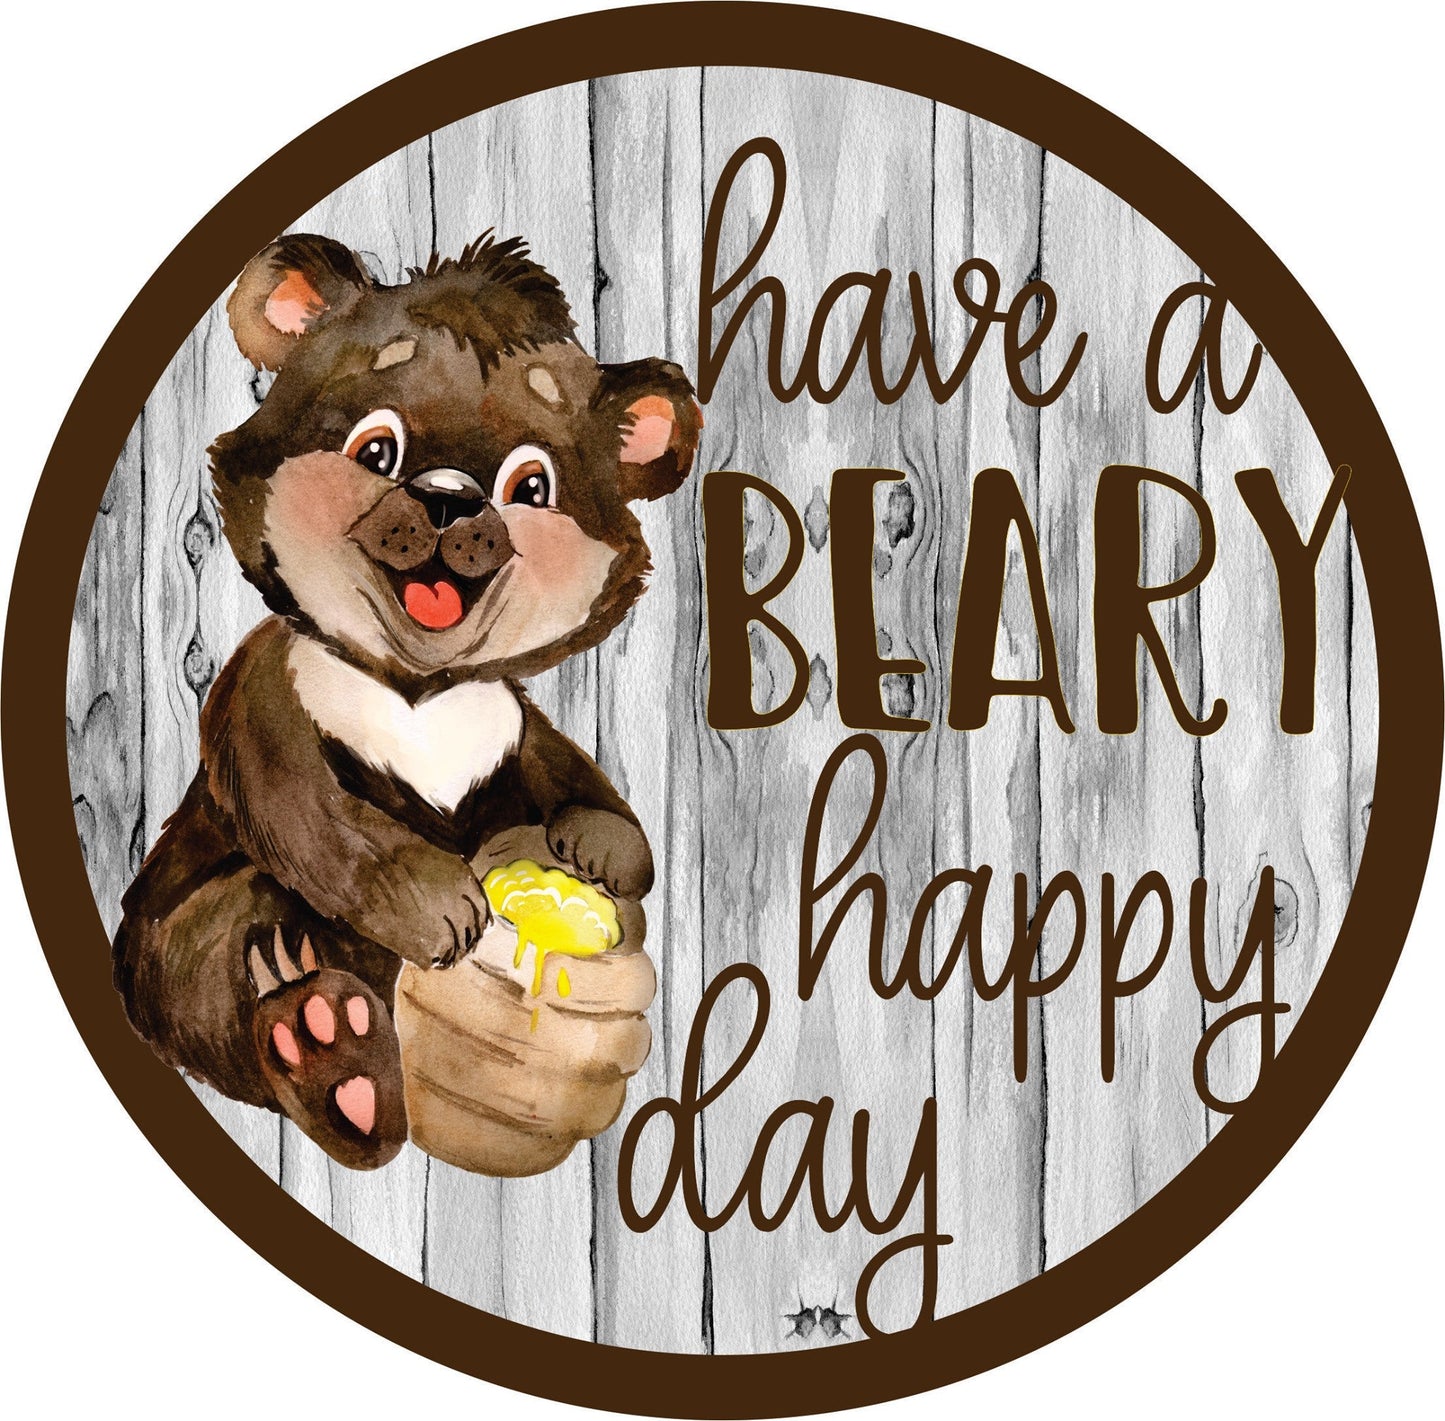 Round Beary Happy Day